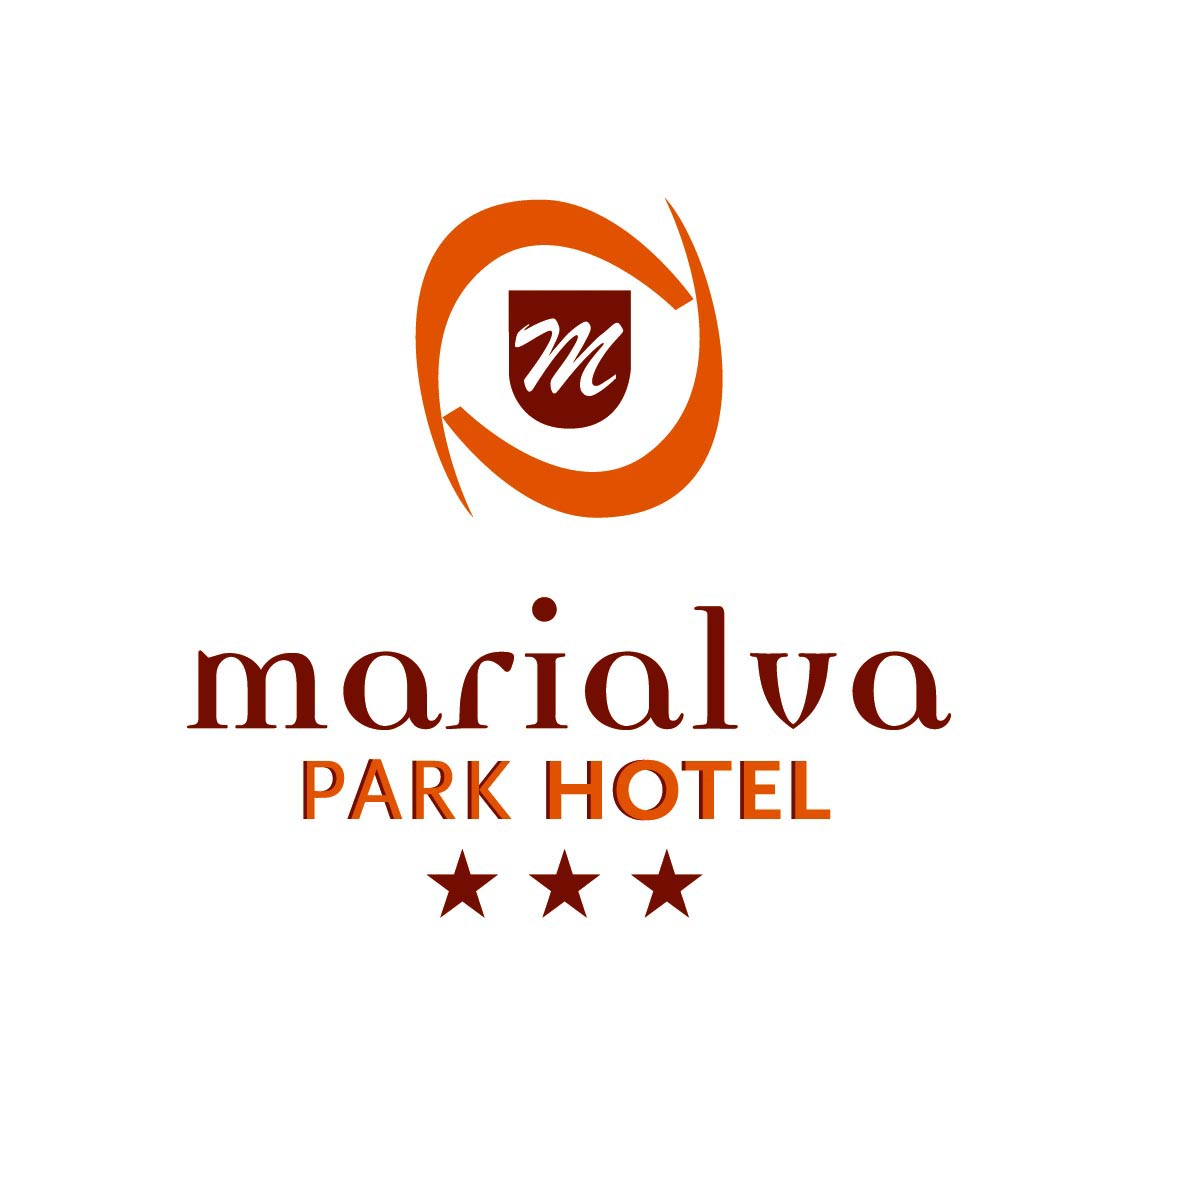 marialva park hotel logo